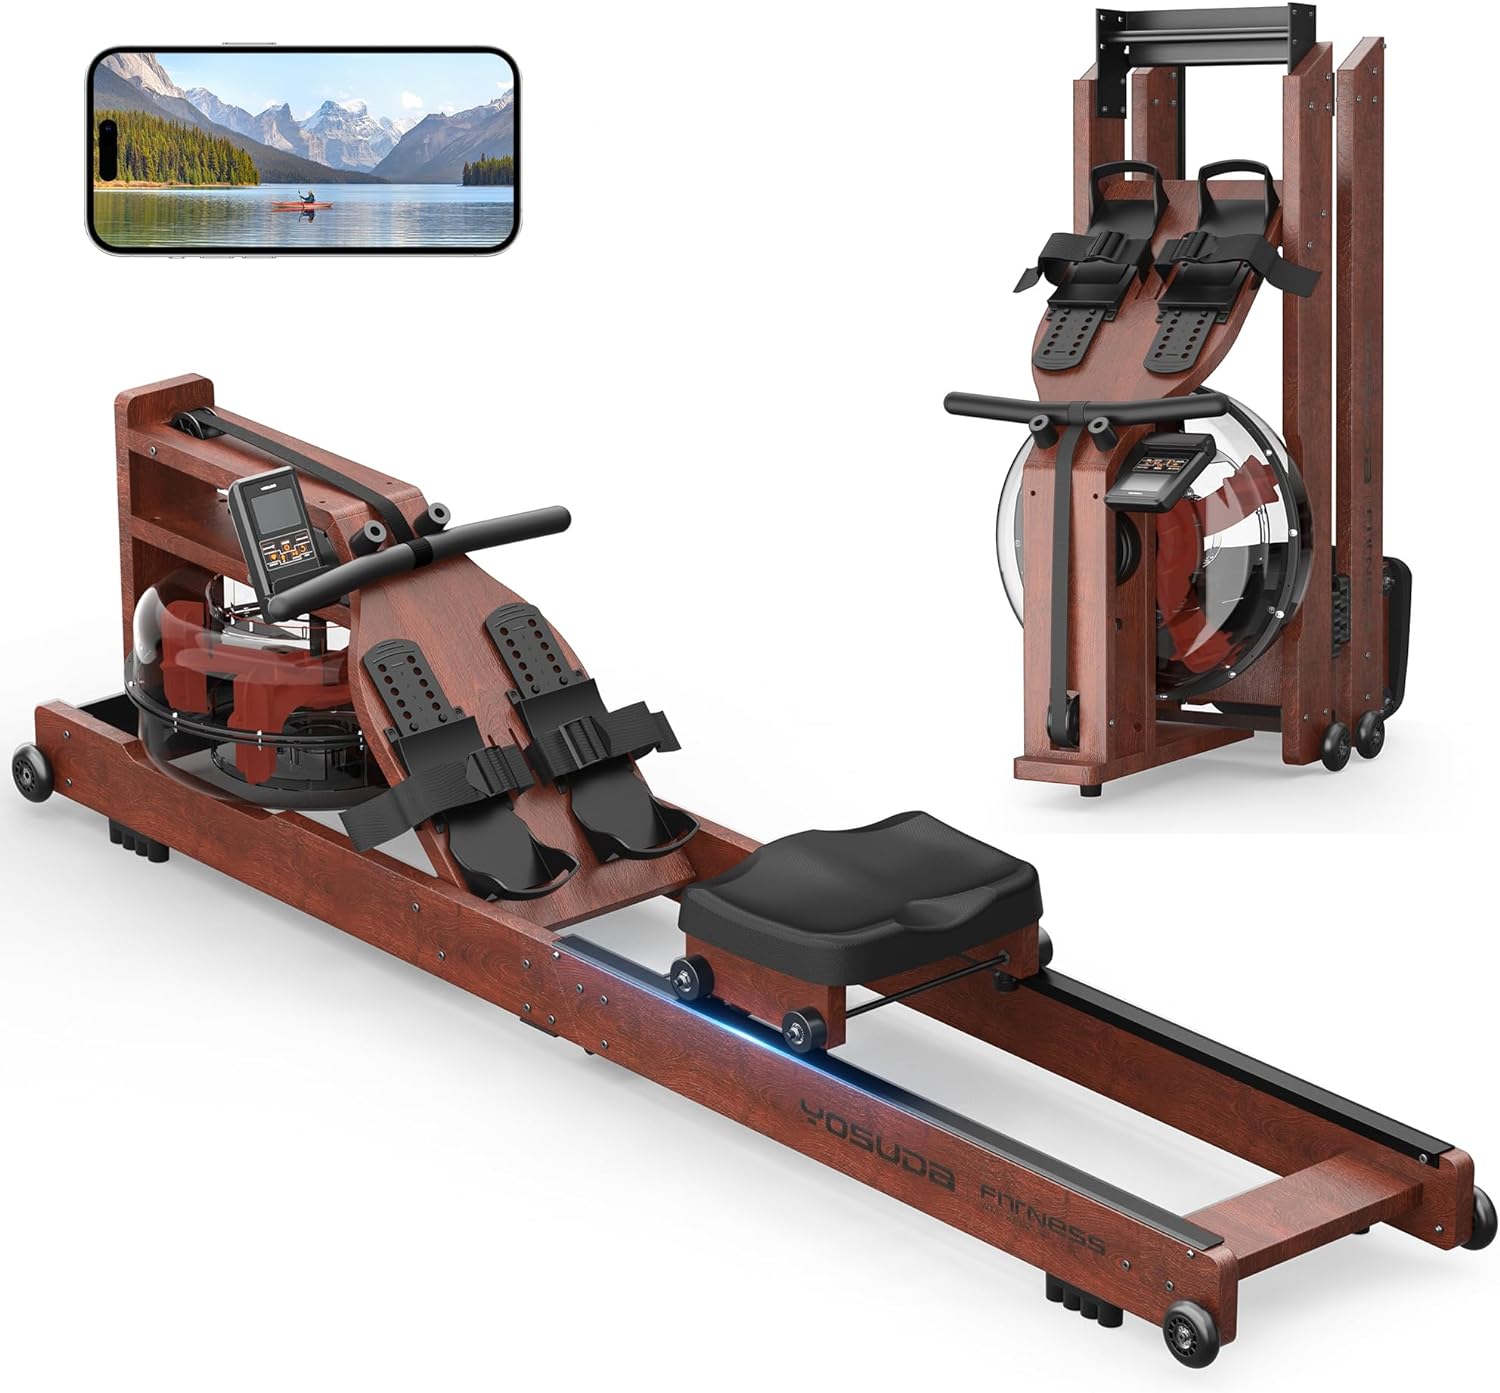 Yosuda Water Rowing Machine Review